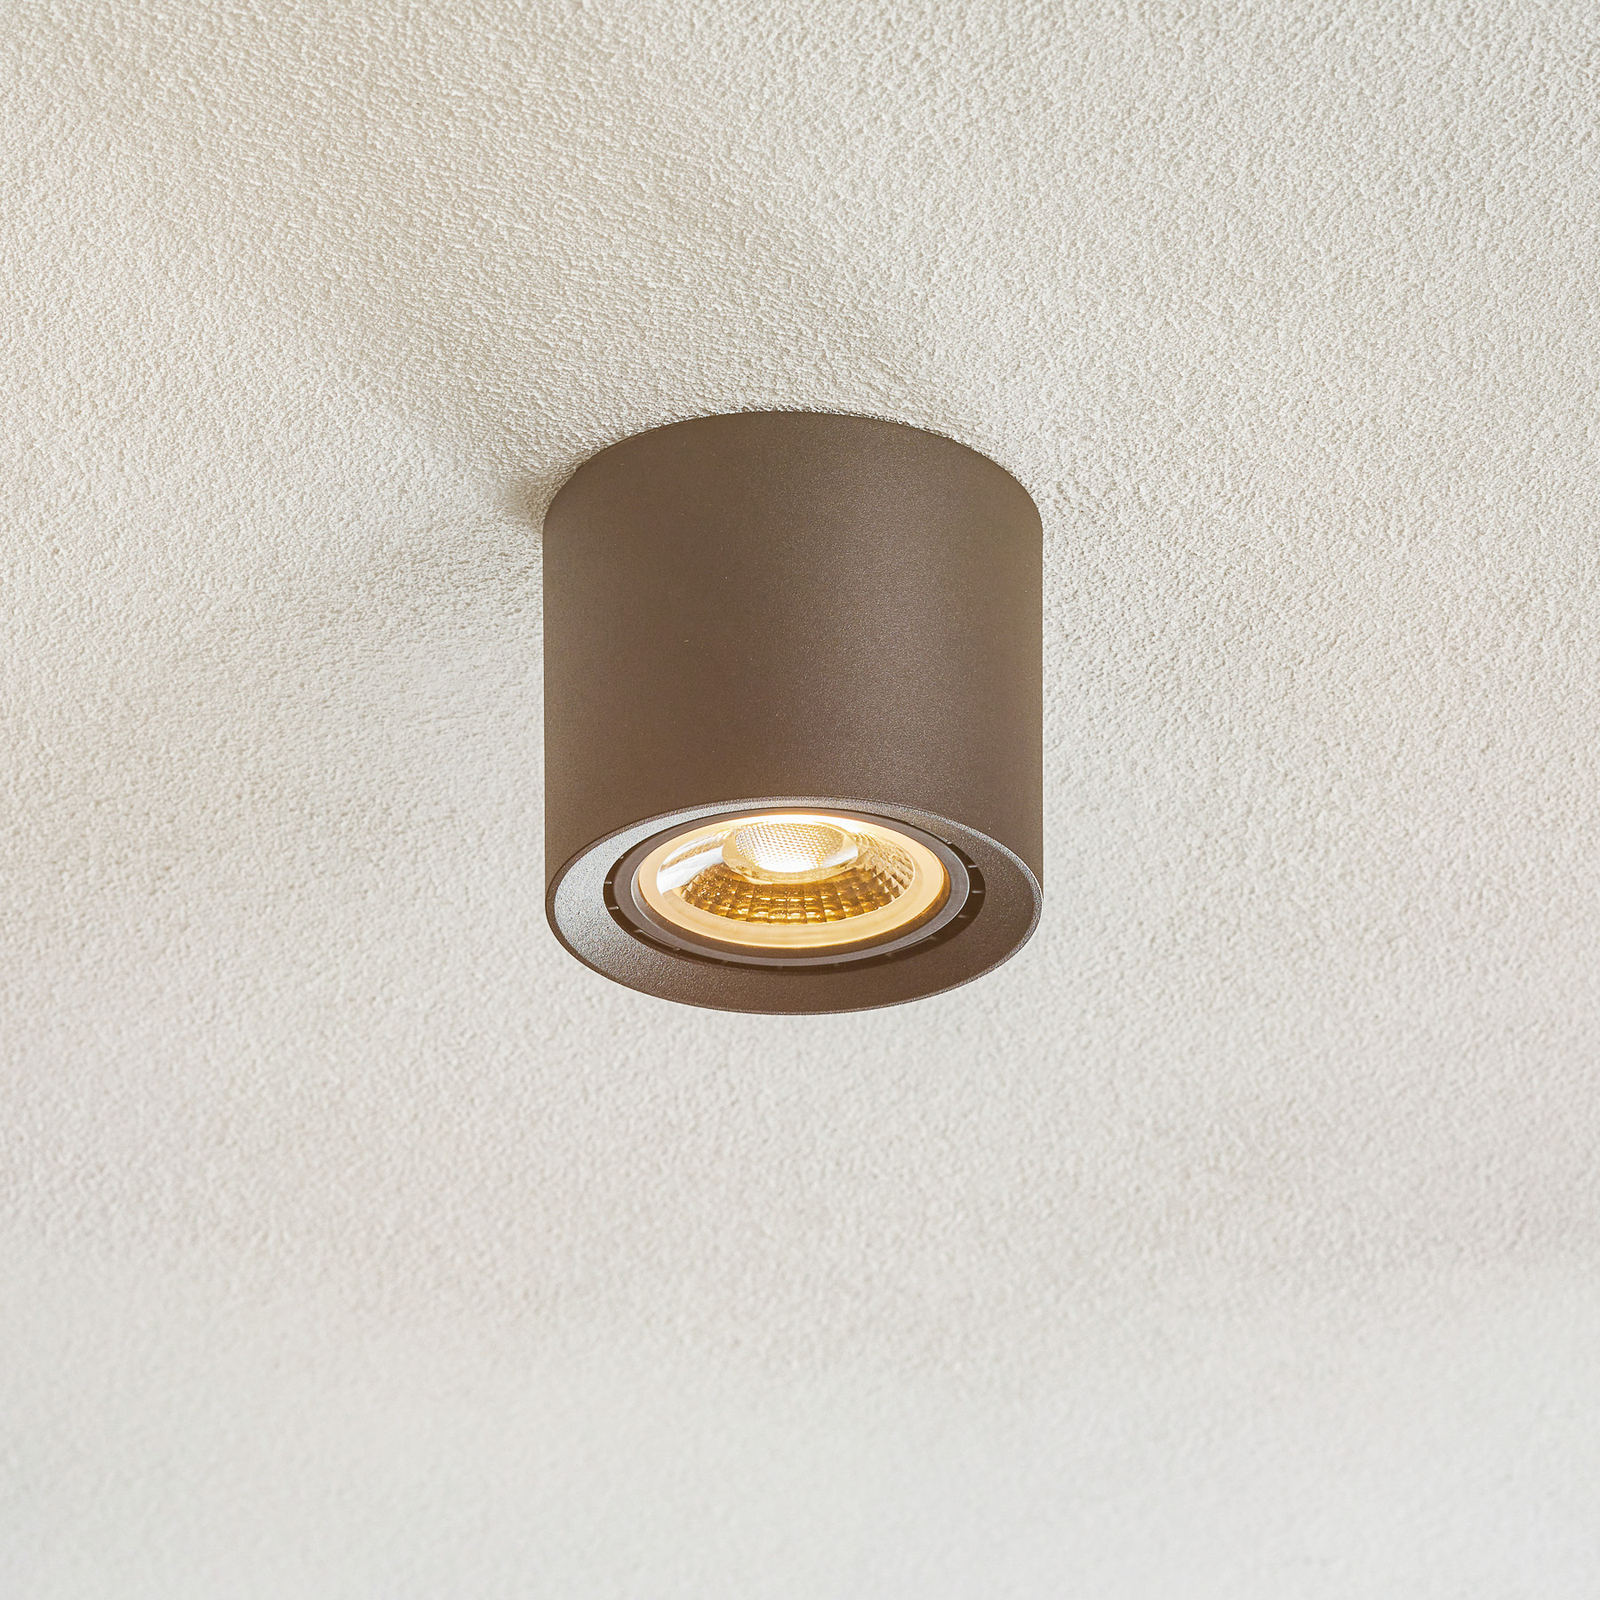 Fedler LED ceiling light dim to warm, black